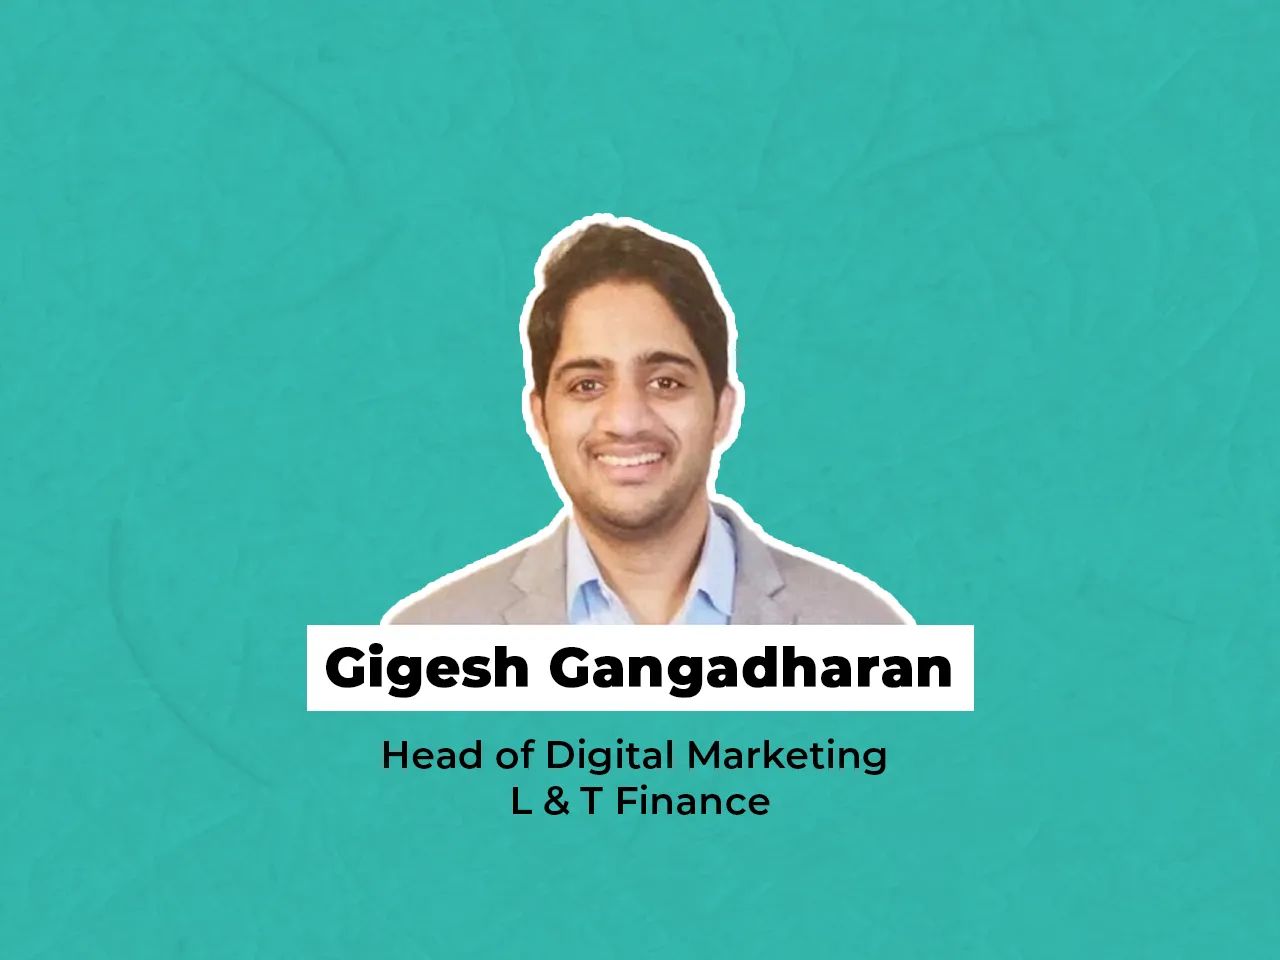 Gigesh Gangadharan joins L&T Finance as Head of Digital Marketing